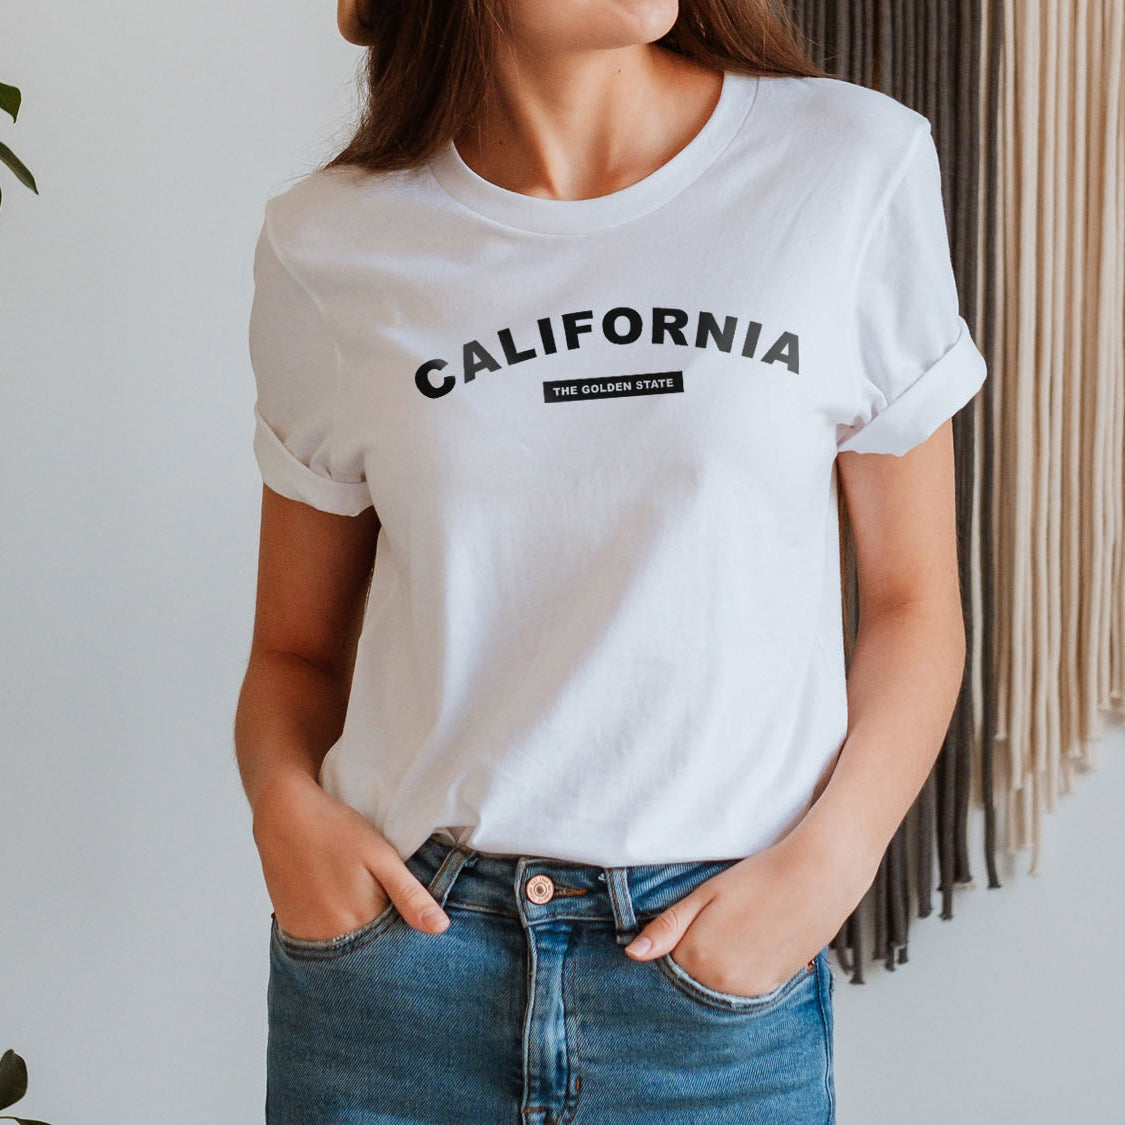 California The Golden State T-shirt - United States Name & Slogan Minimal Design Printed Tee Shirt